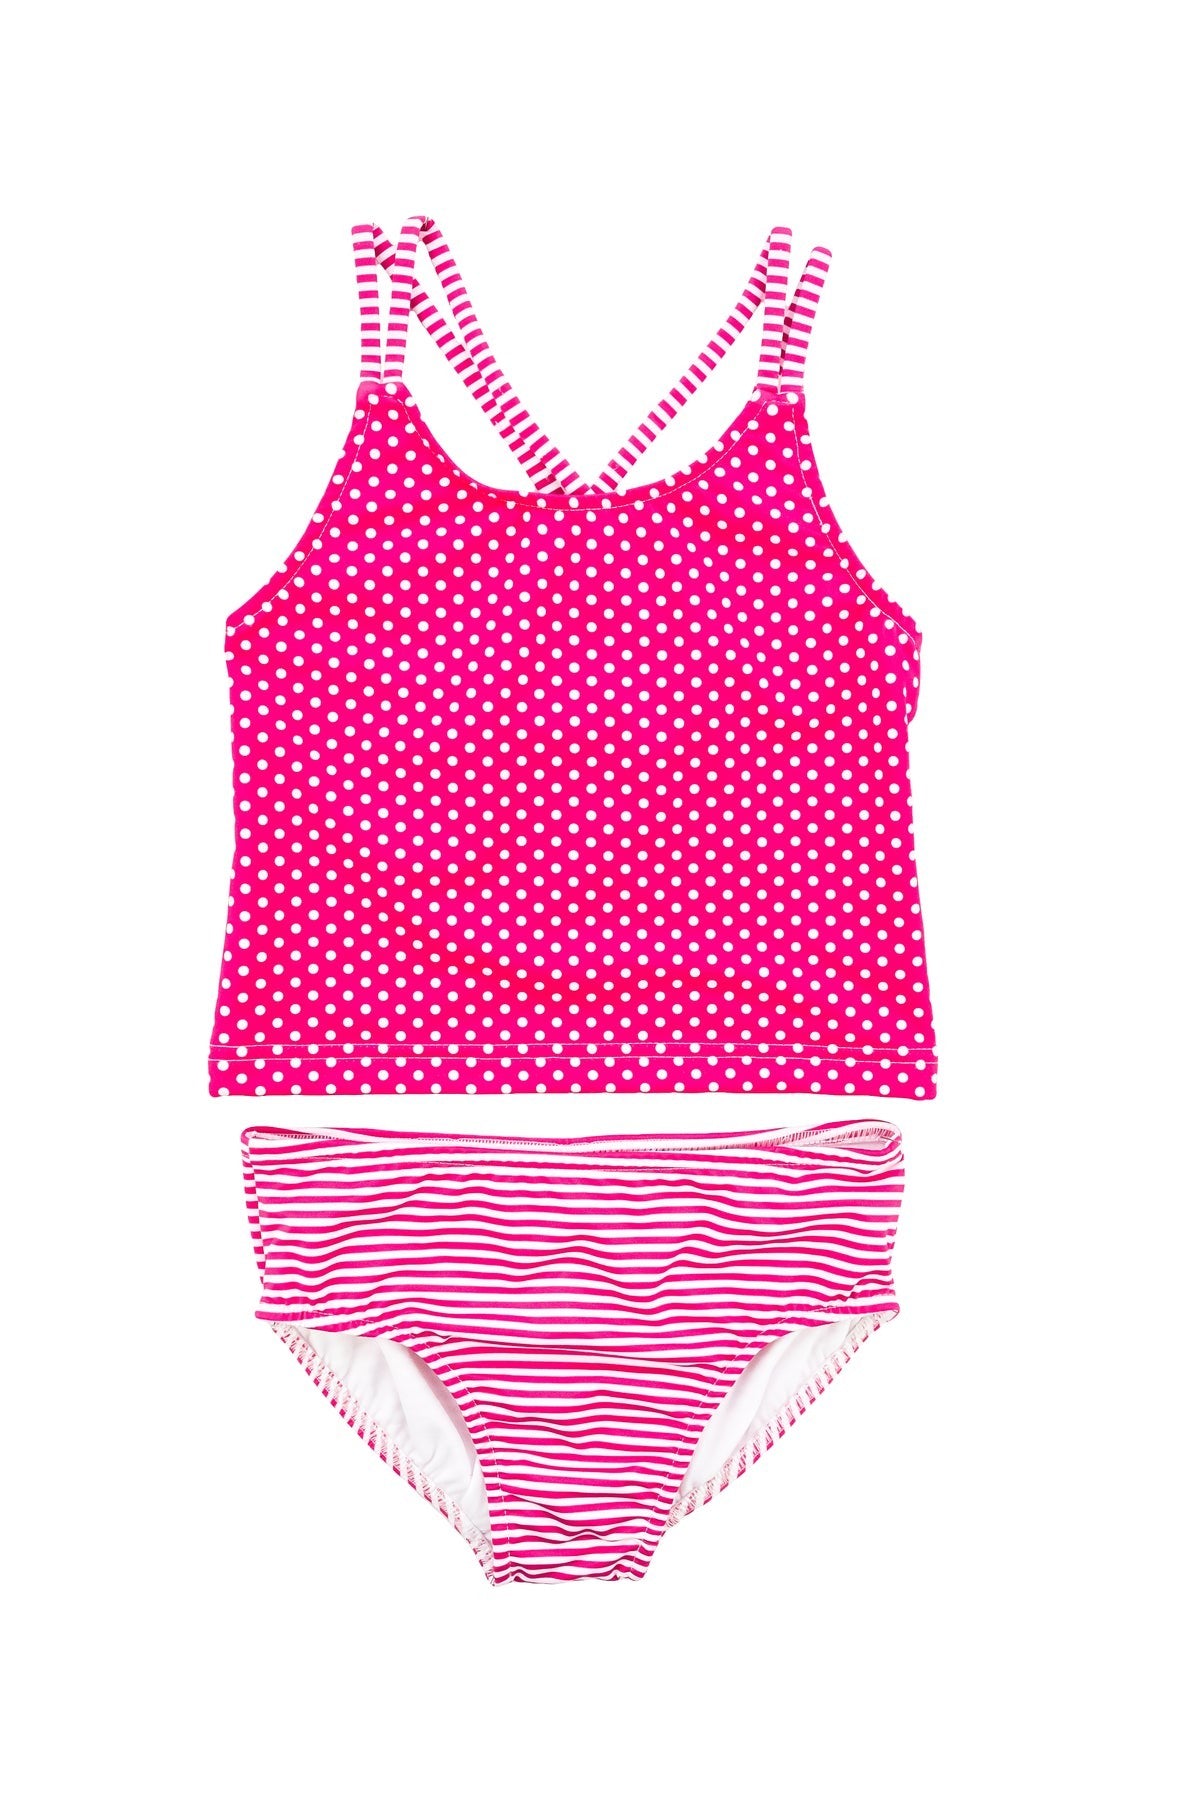 Florence Eiseman Polka Dot and Stripe Tankini Pink/White C5325 5101